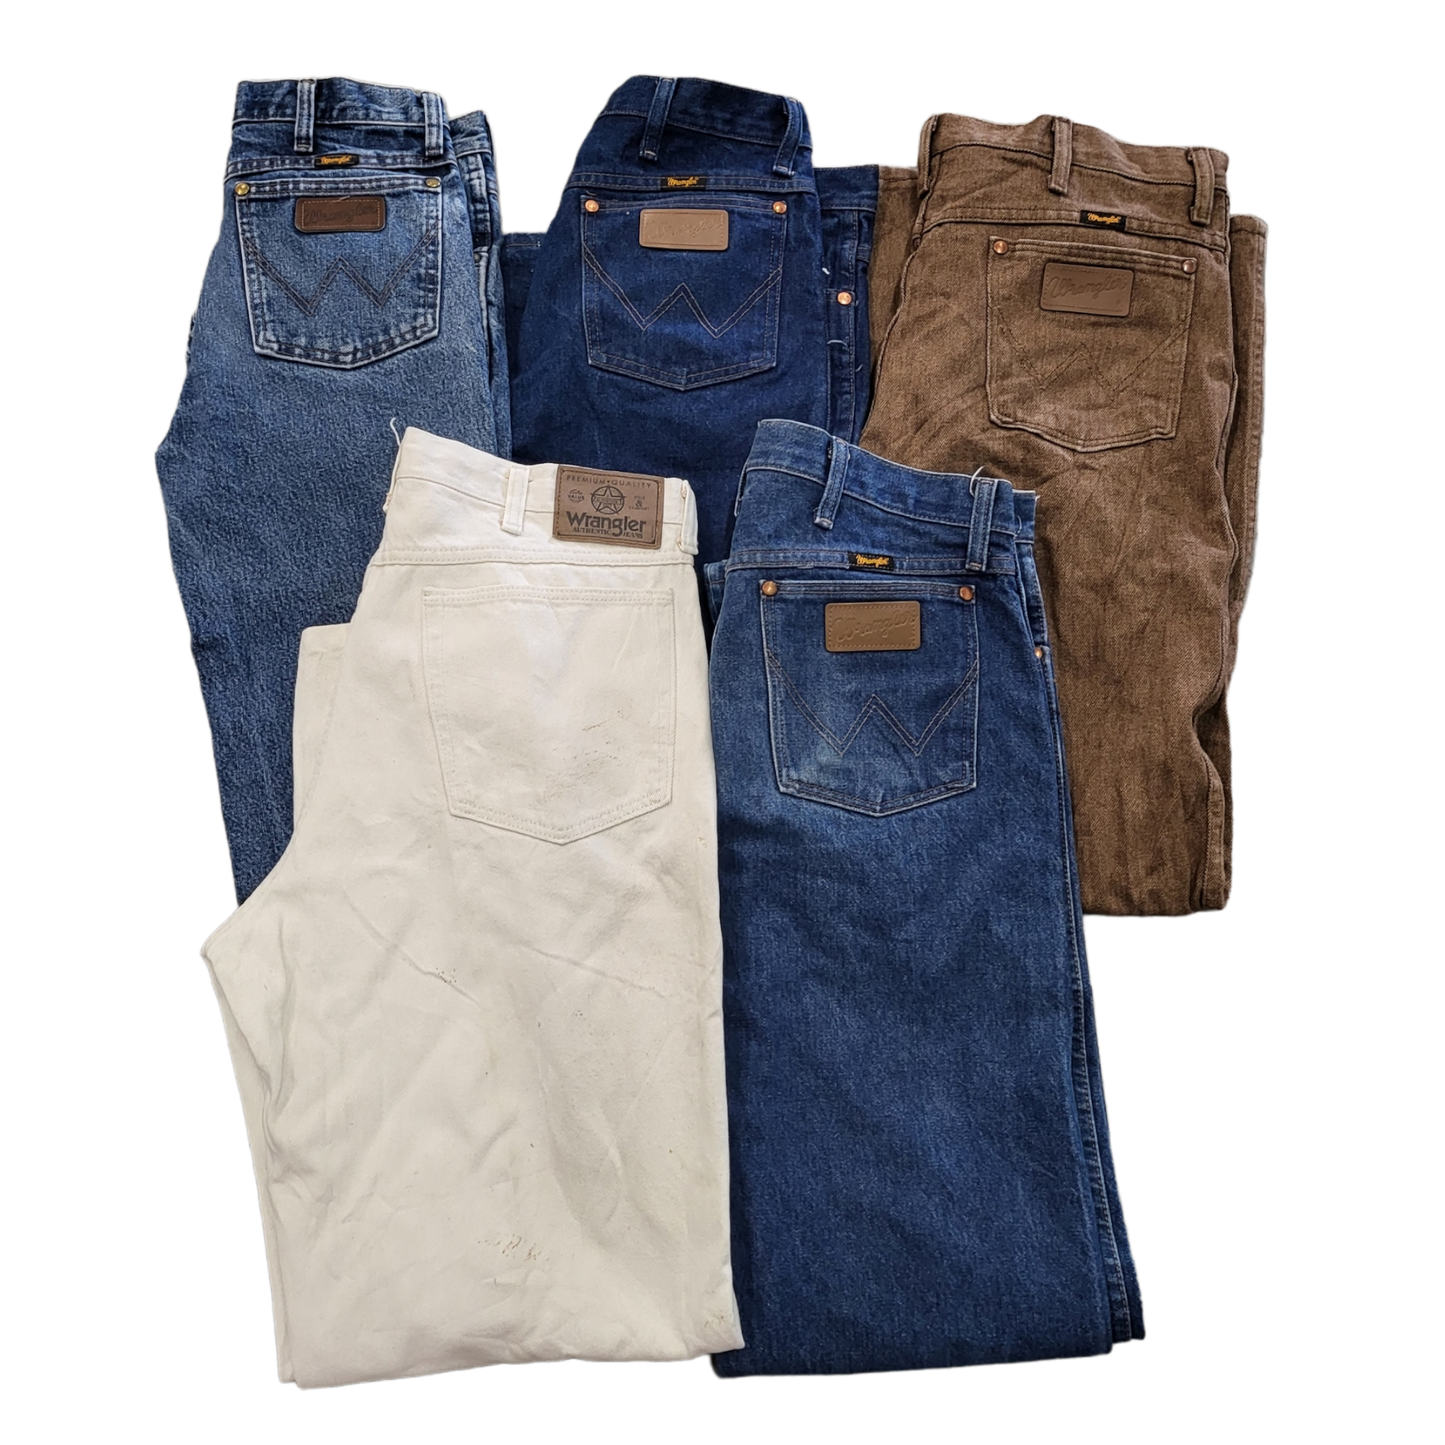 WRANGLER & LEE Jeans for women and men wholesale, Women's clothing, Official archives of Merkandi